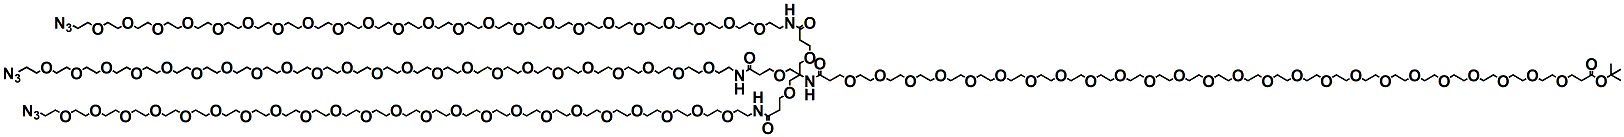 Molecular structure of the compound: t-butyl ester-PEG25-Amide-Tri(3-methoxypropanamide-PEG23-Azide) Methane